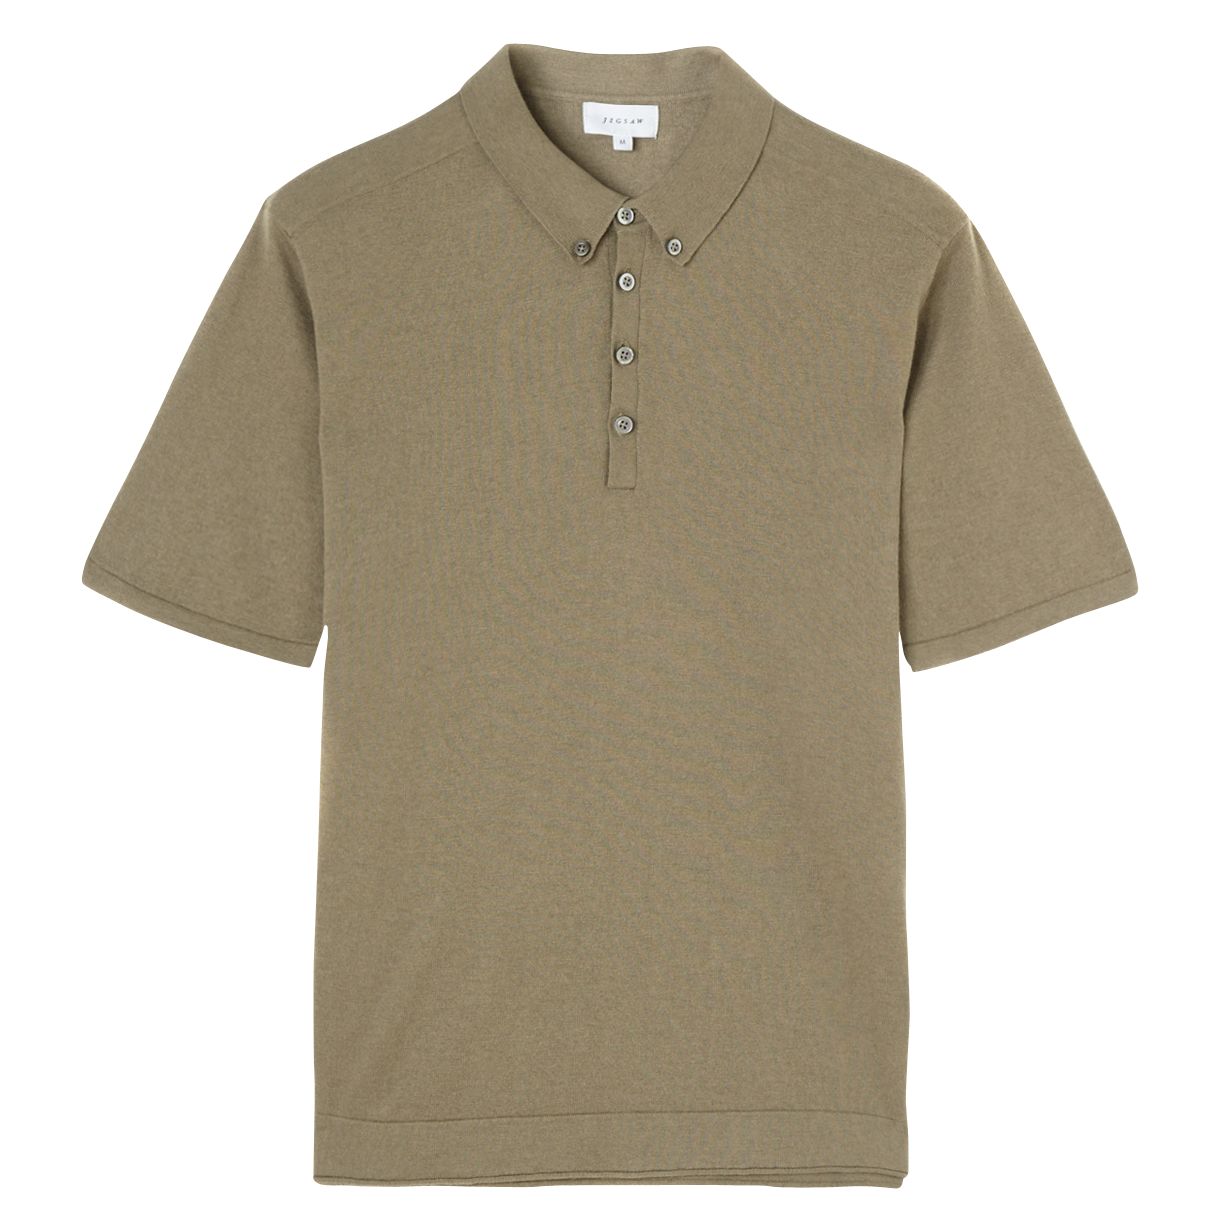 Jigsaw Cotton Cashmere Knit Polo Shirt, Light Olive, S